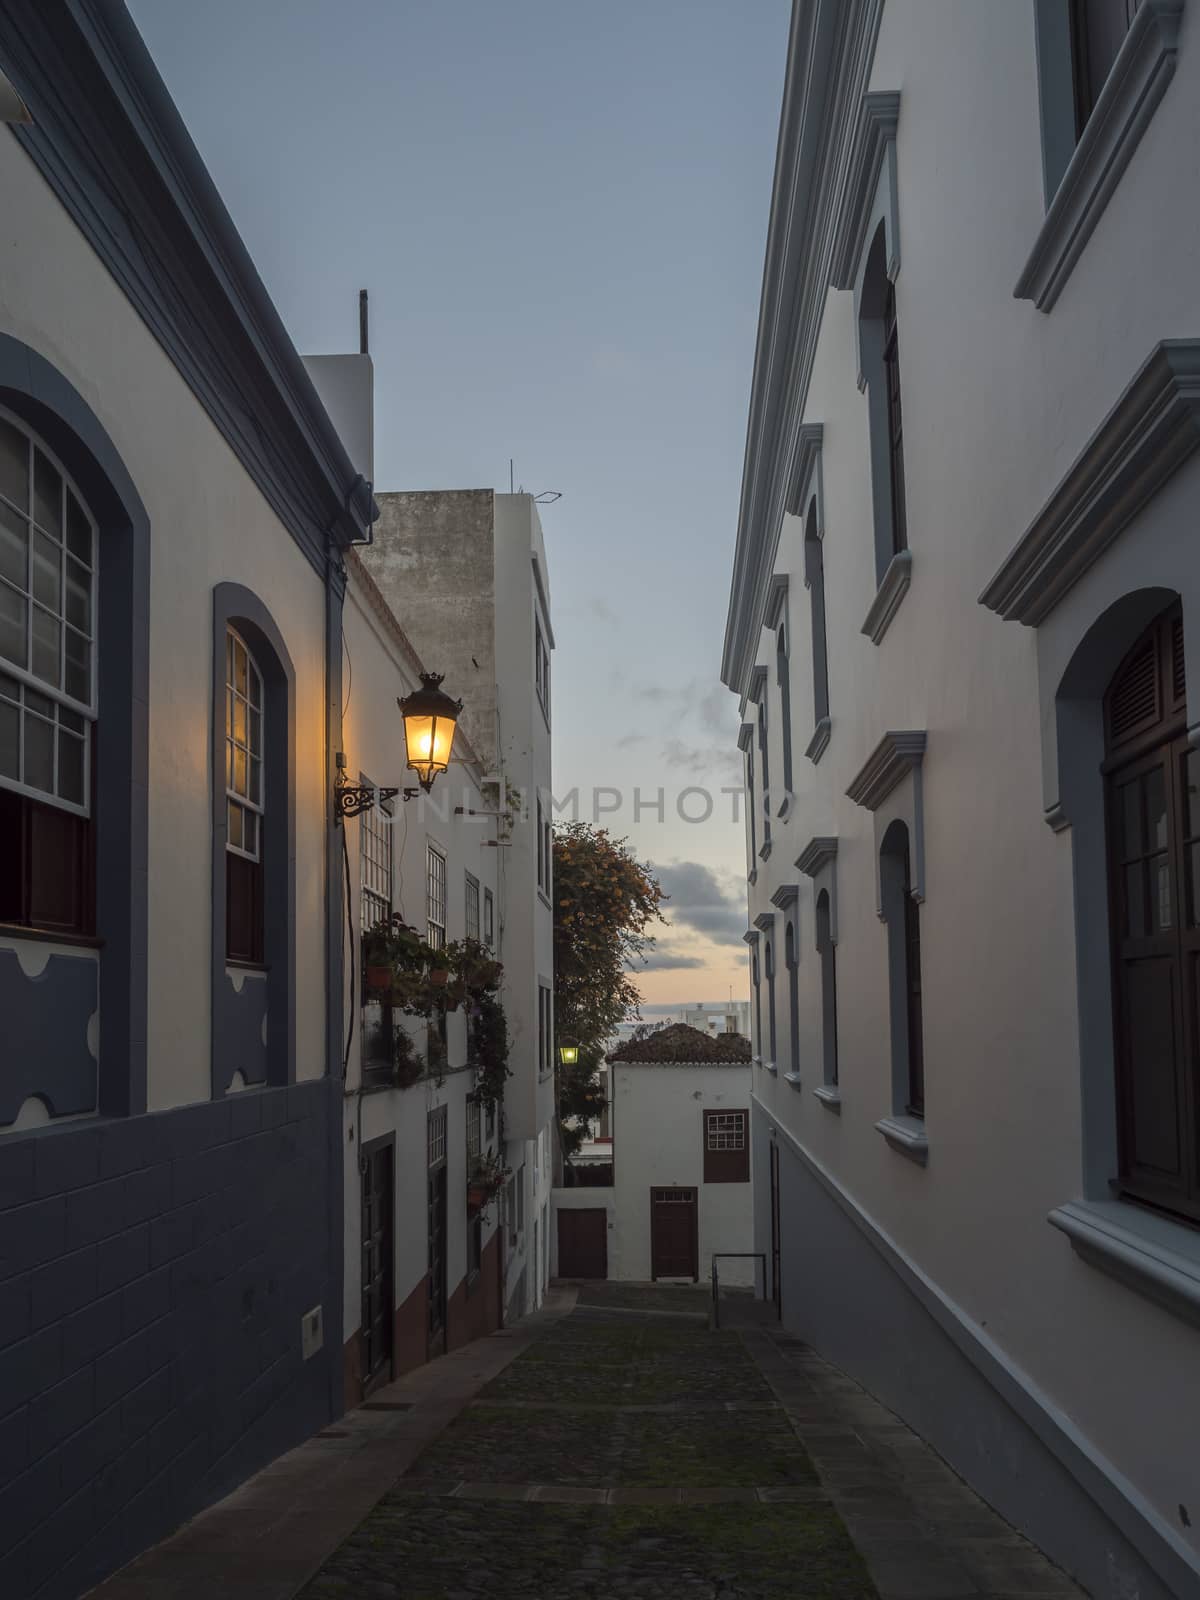 Evening empty narrow street at Santa Cruz de la Palma city center with glowing lantern, blue white traditional houses and cobble stone paving. La Palma, Canary Islands, Spain.